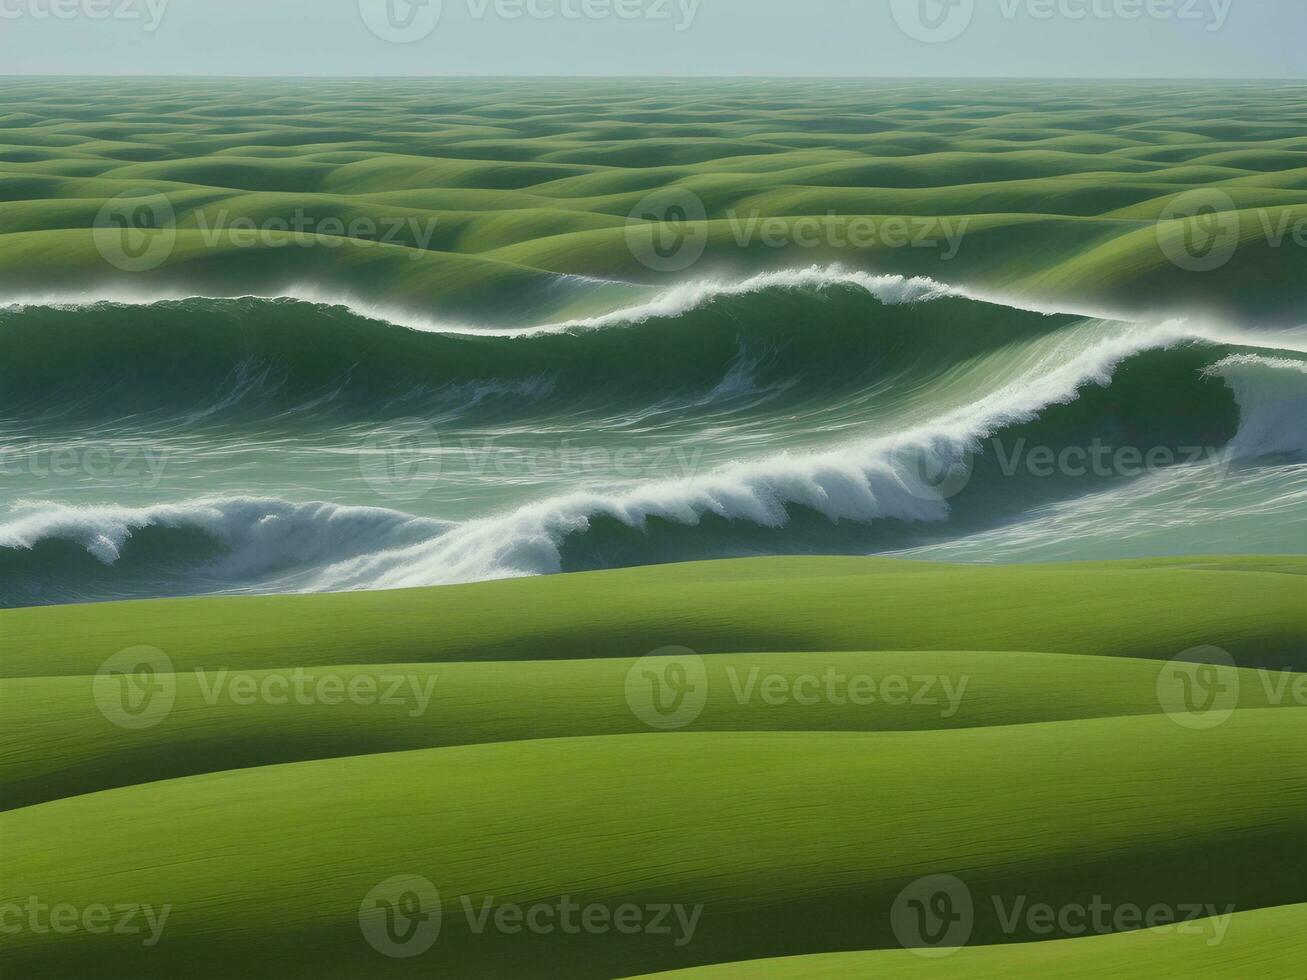 Sea beach green water waves illustration photo